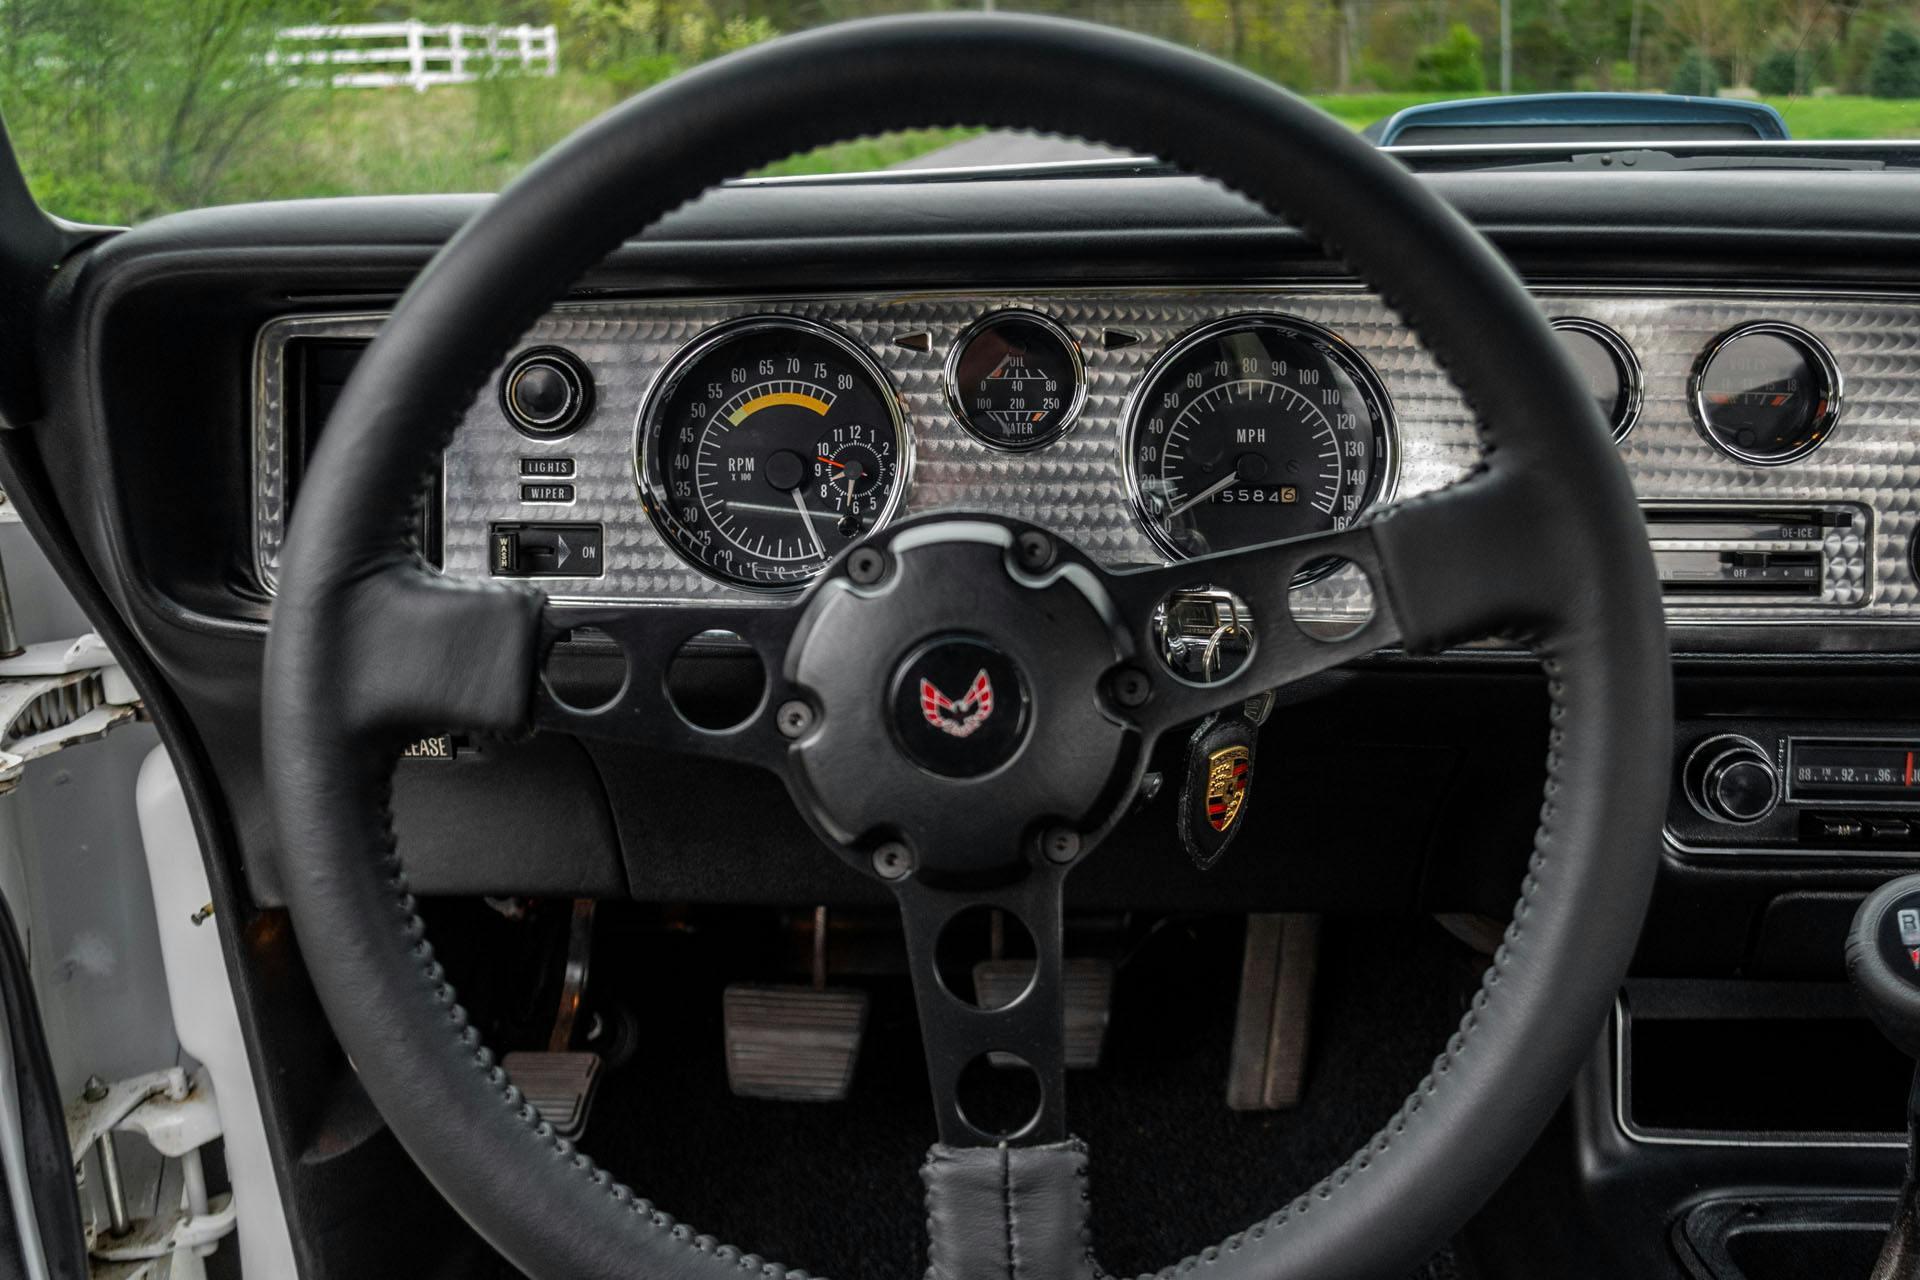 1970 Pontiac Firebird Trans Am Ram Air III steering wheel